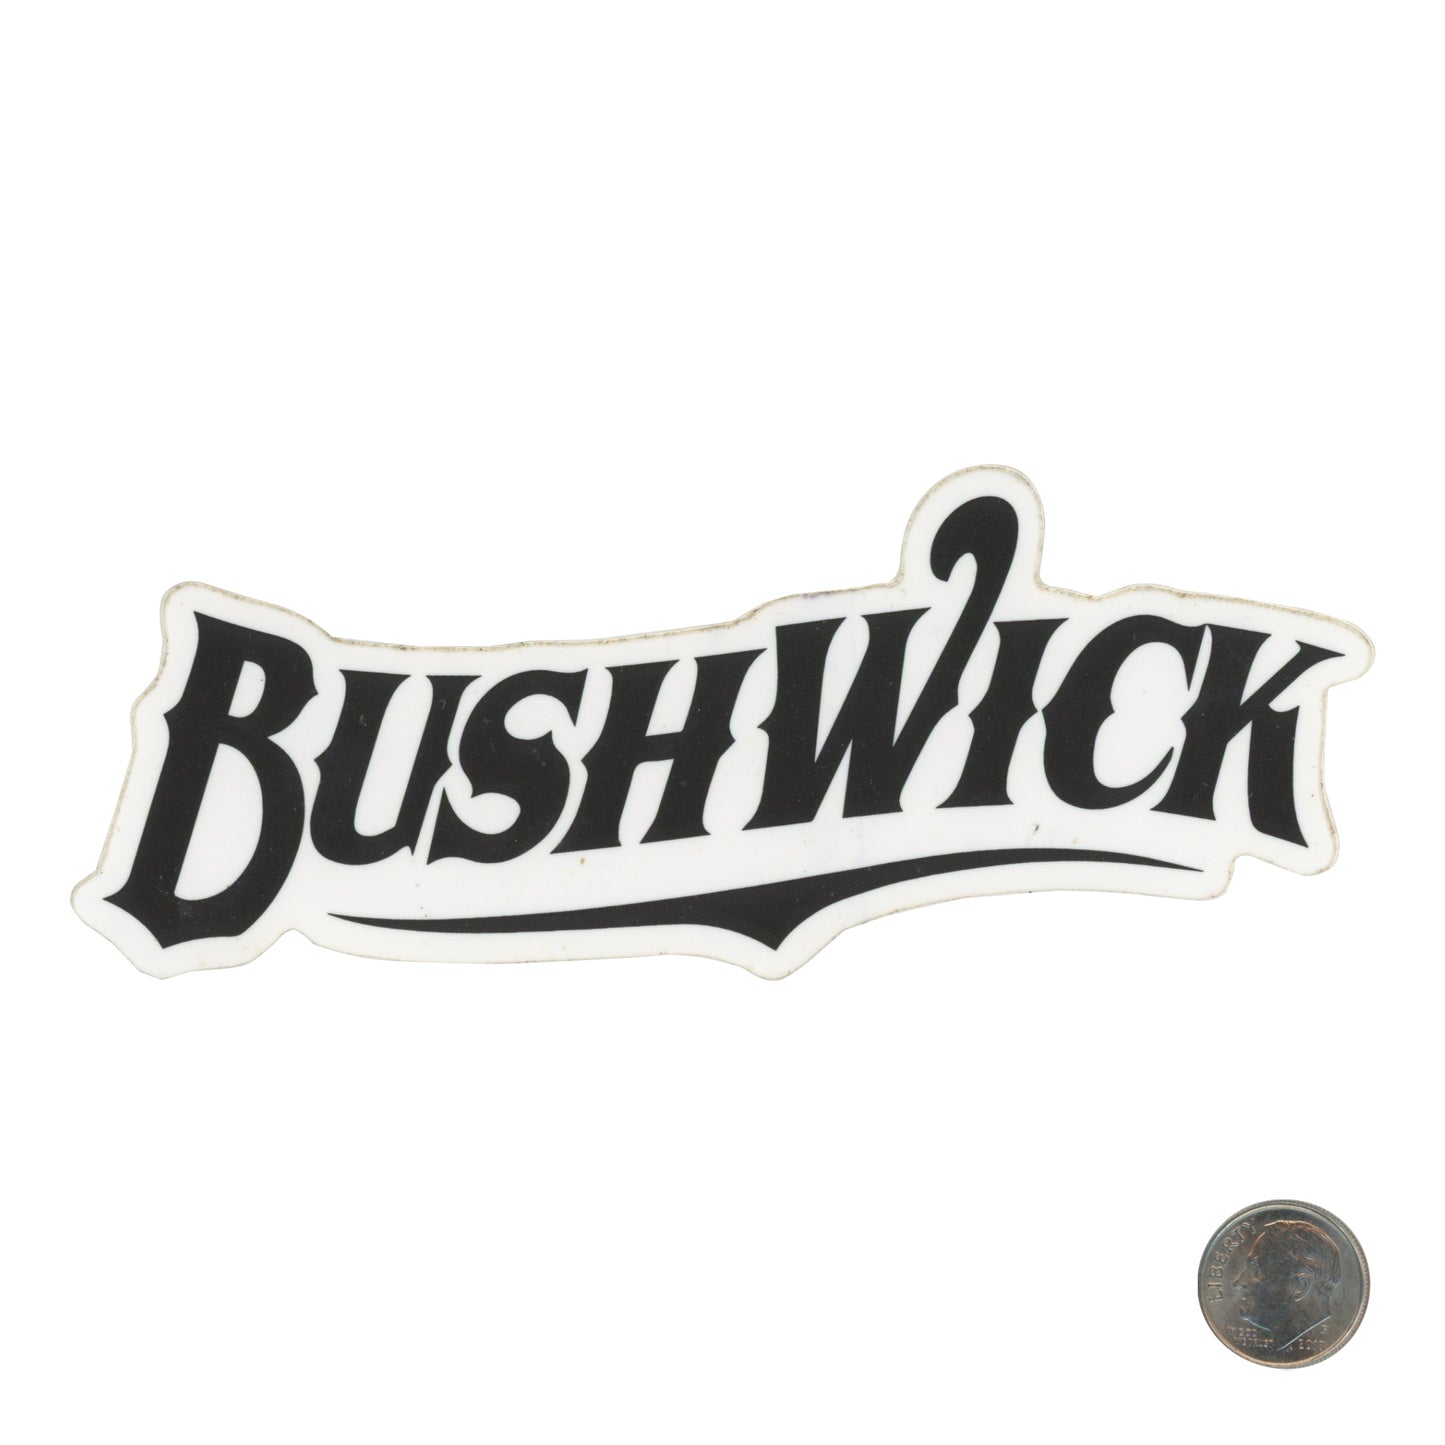 Bushwick Black Sticker with dime